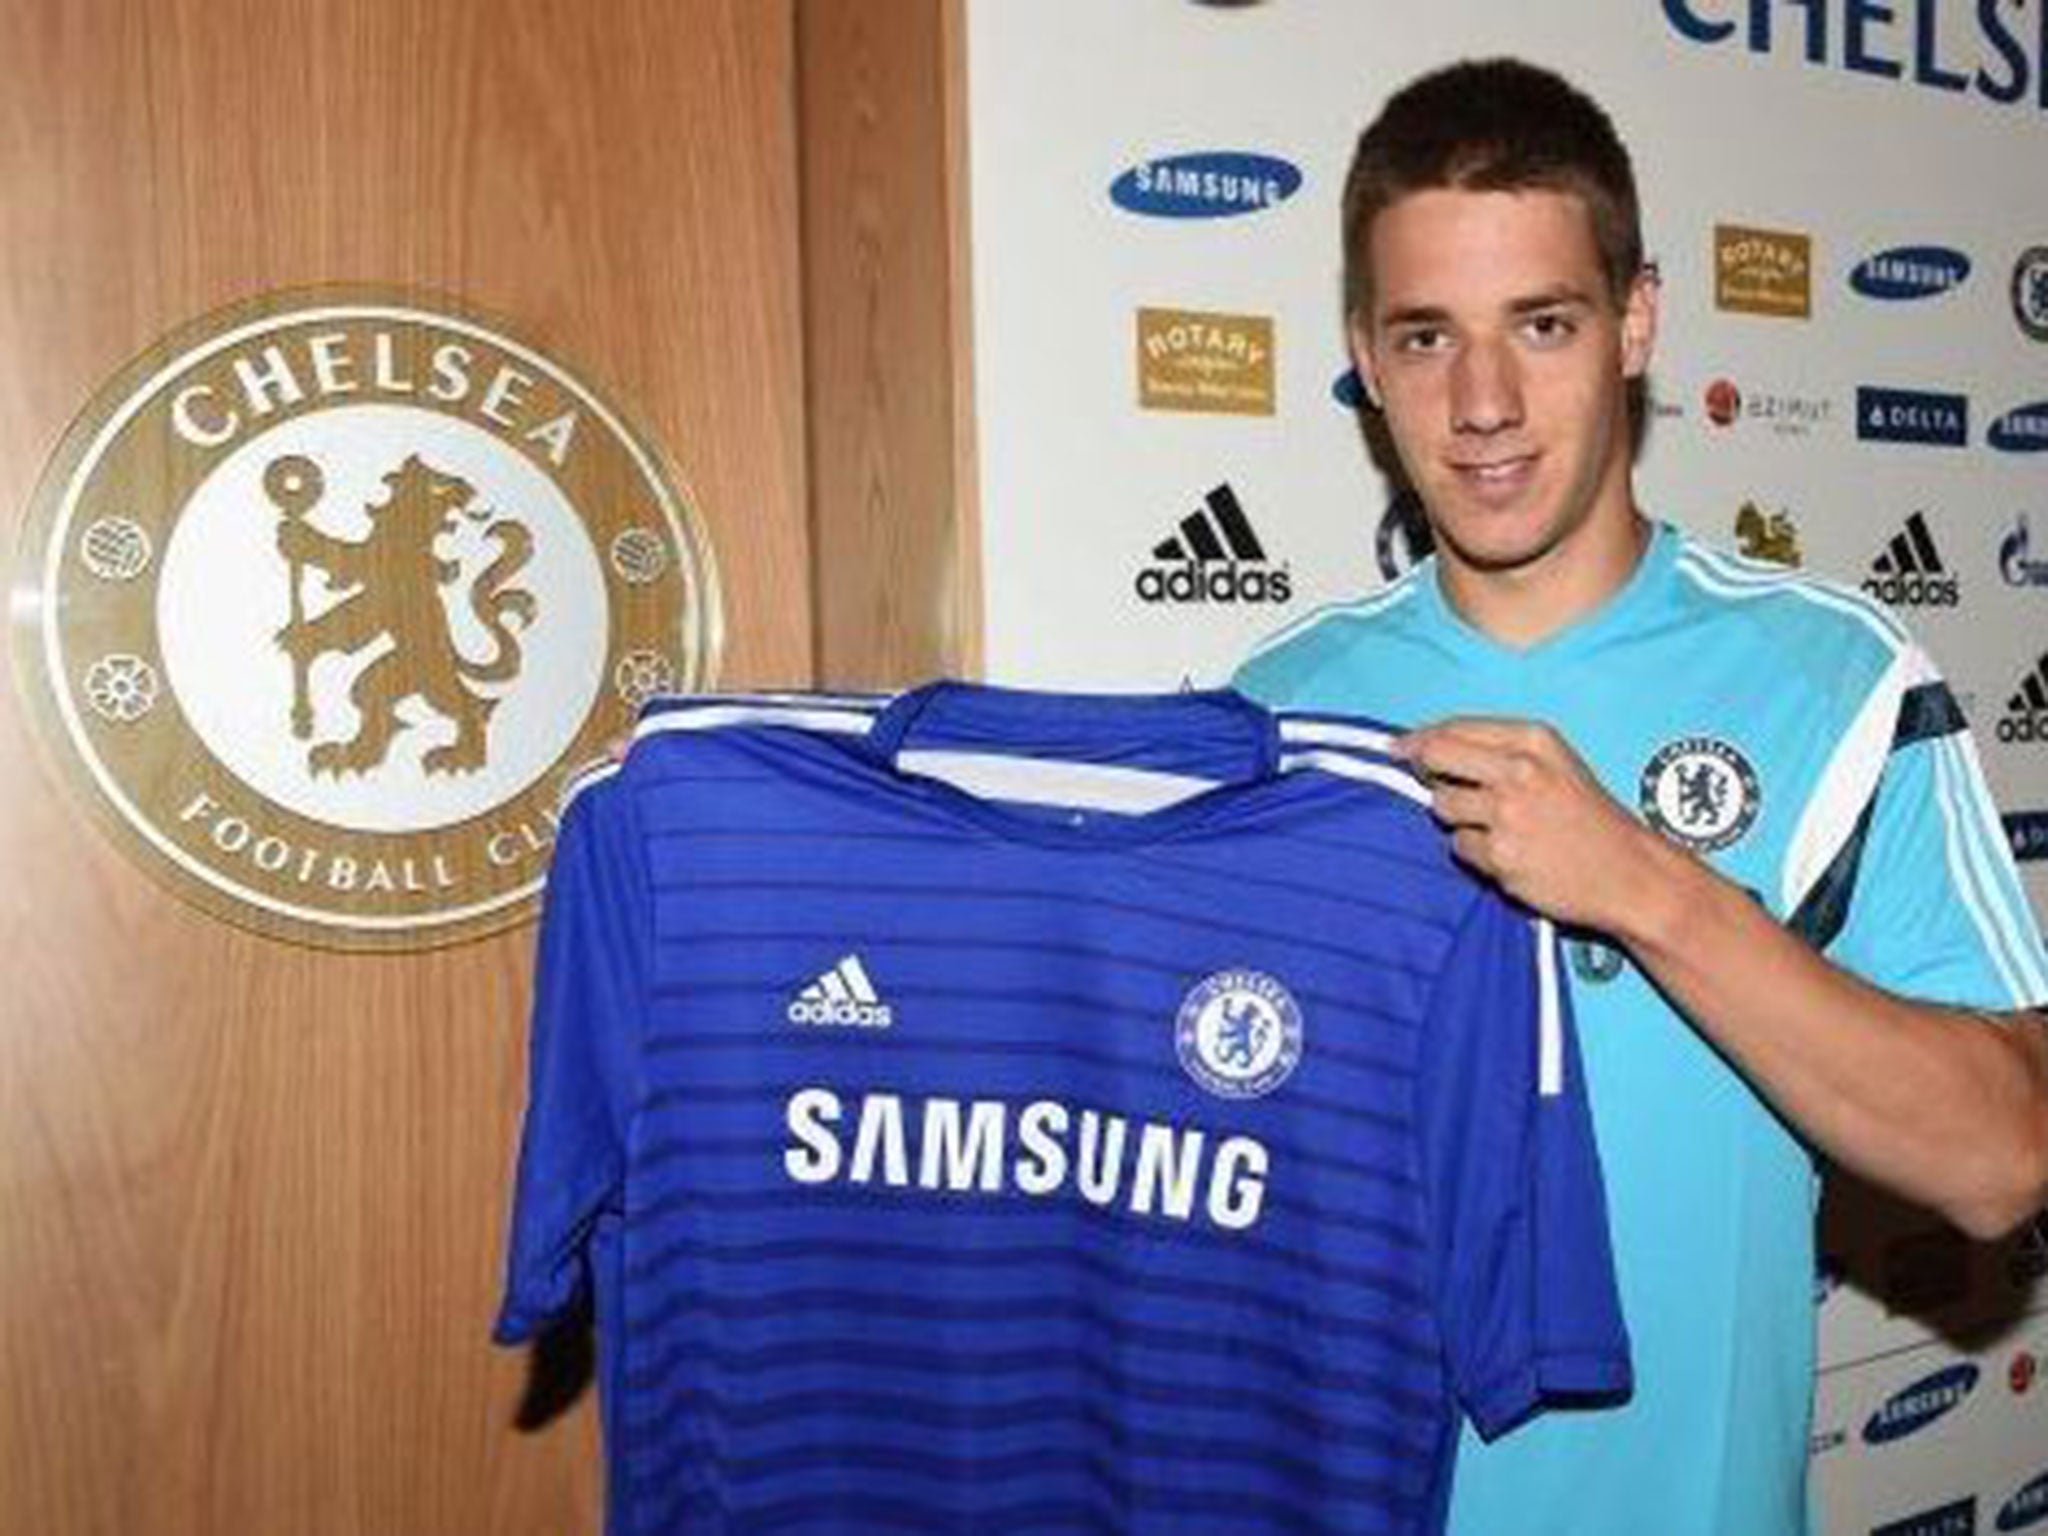 Chelsea have signed teenage midfielder Mario Pasalic from Hajduk Split